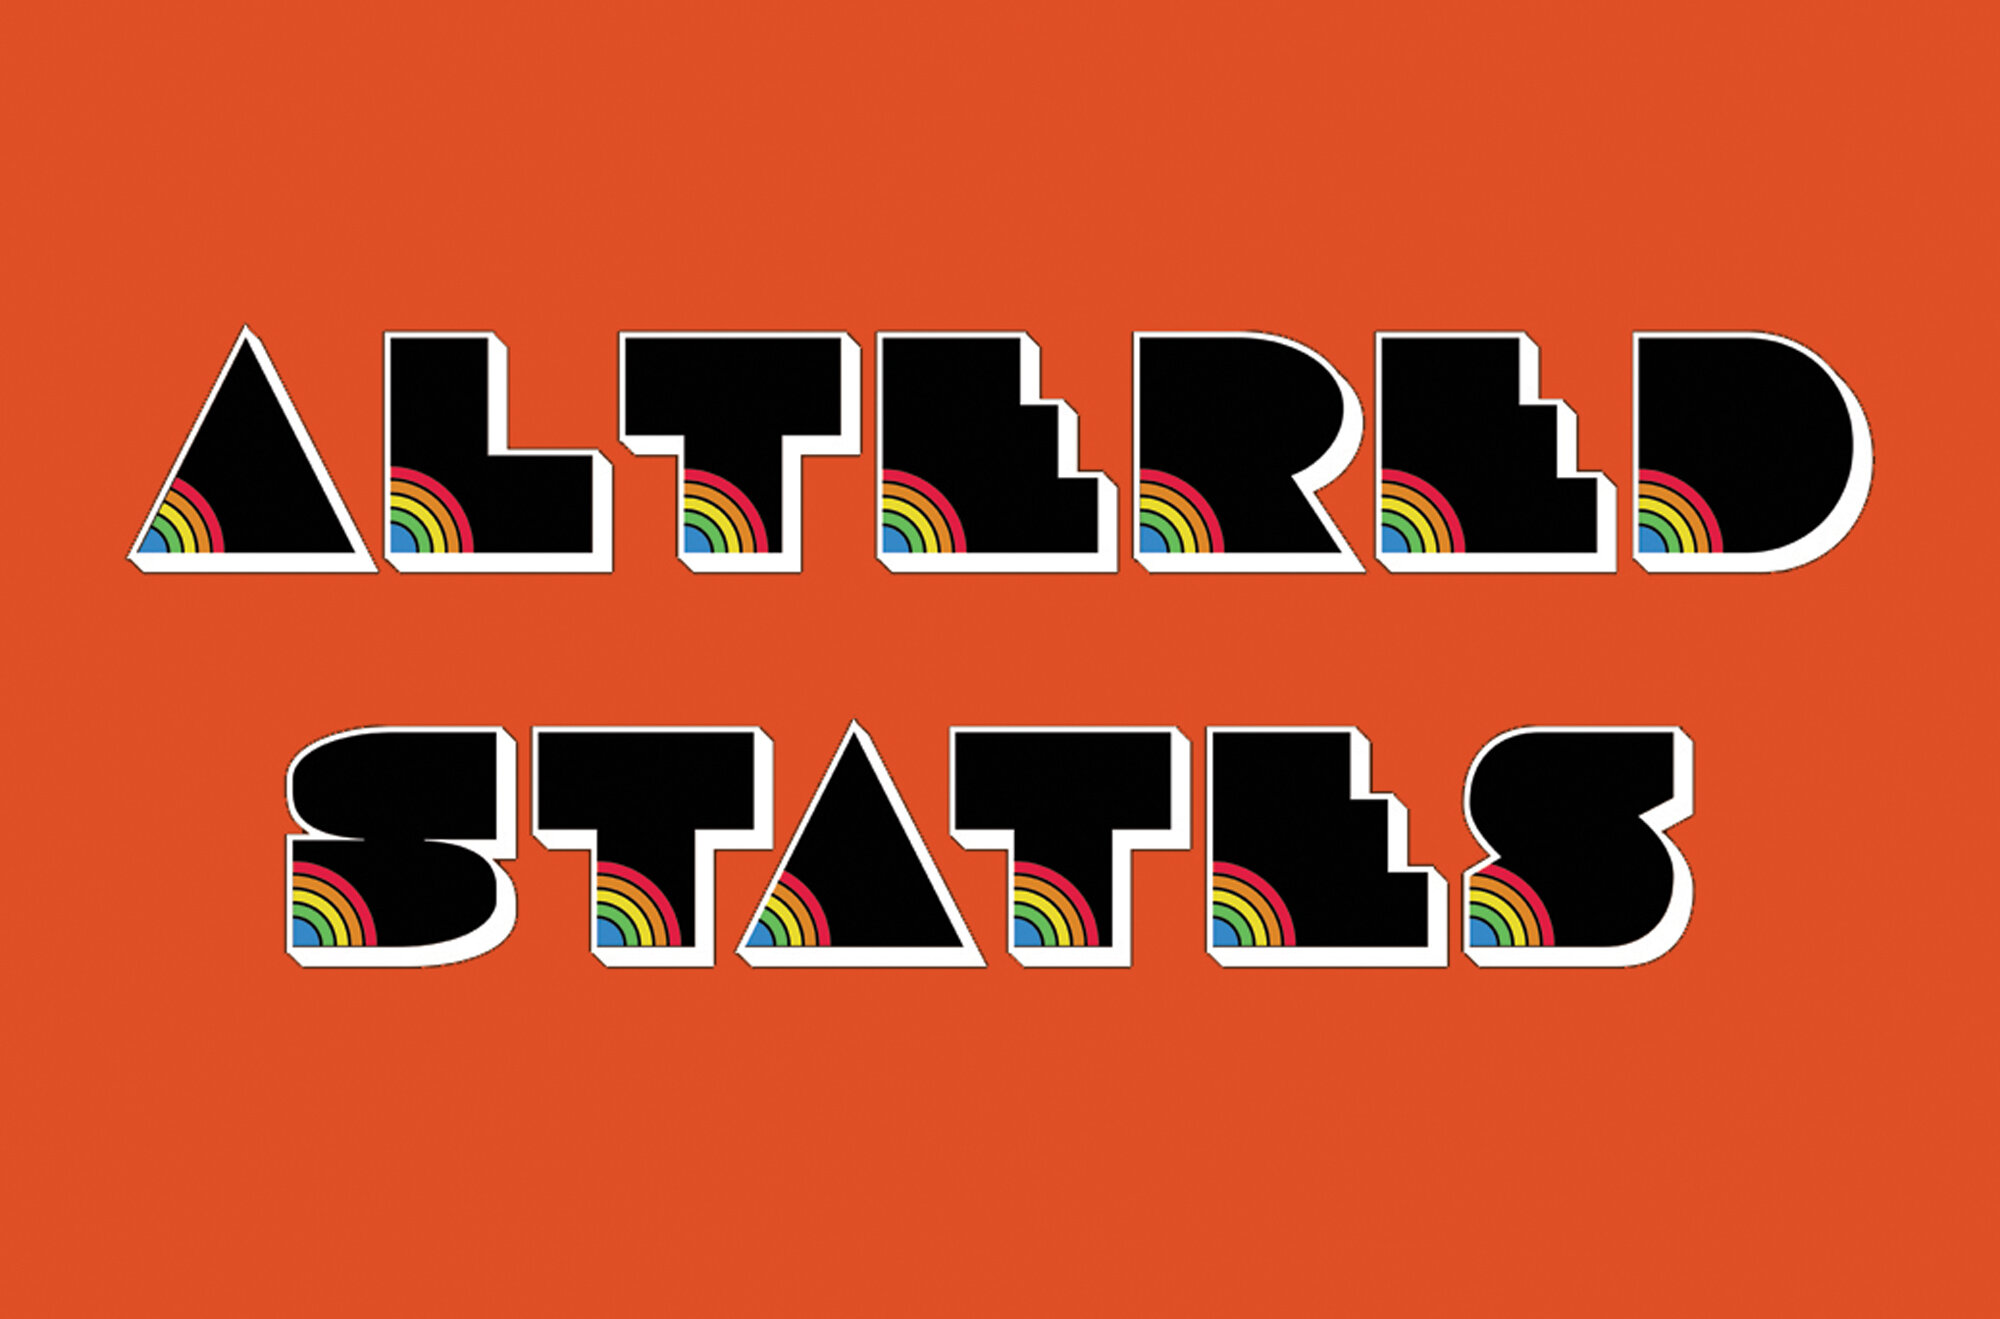 Business_Card_altered states orange.jpg